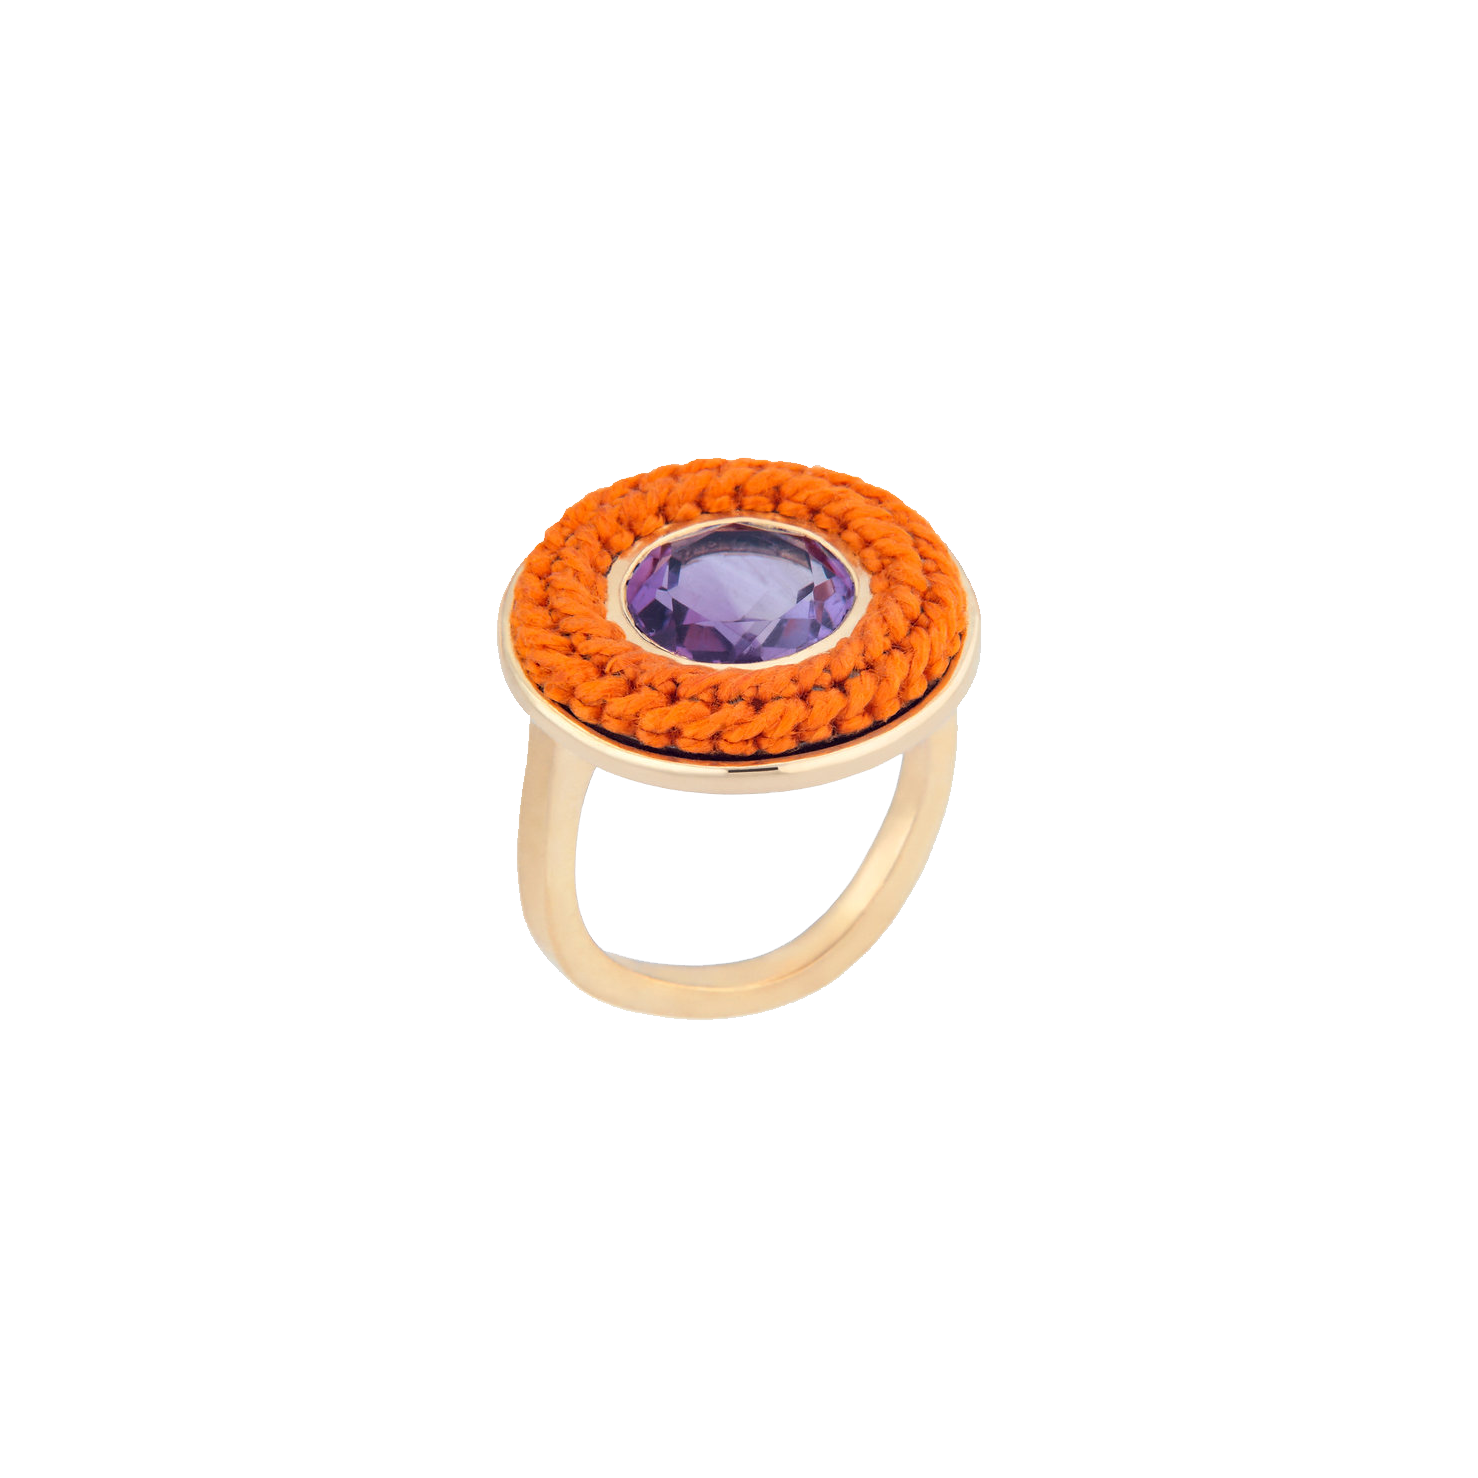 Small Orange Tambourine Ring with Amethyst